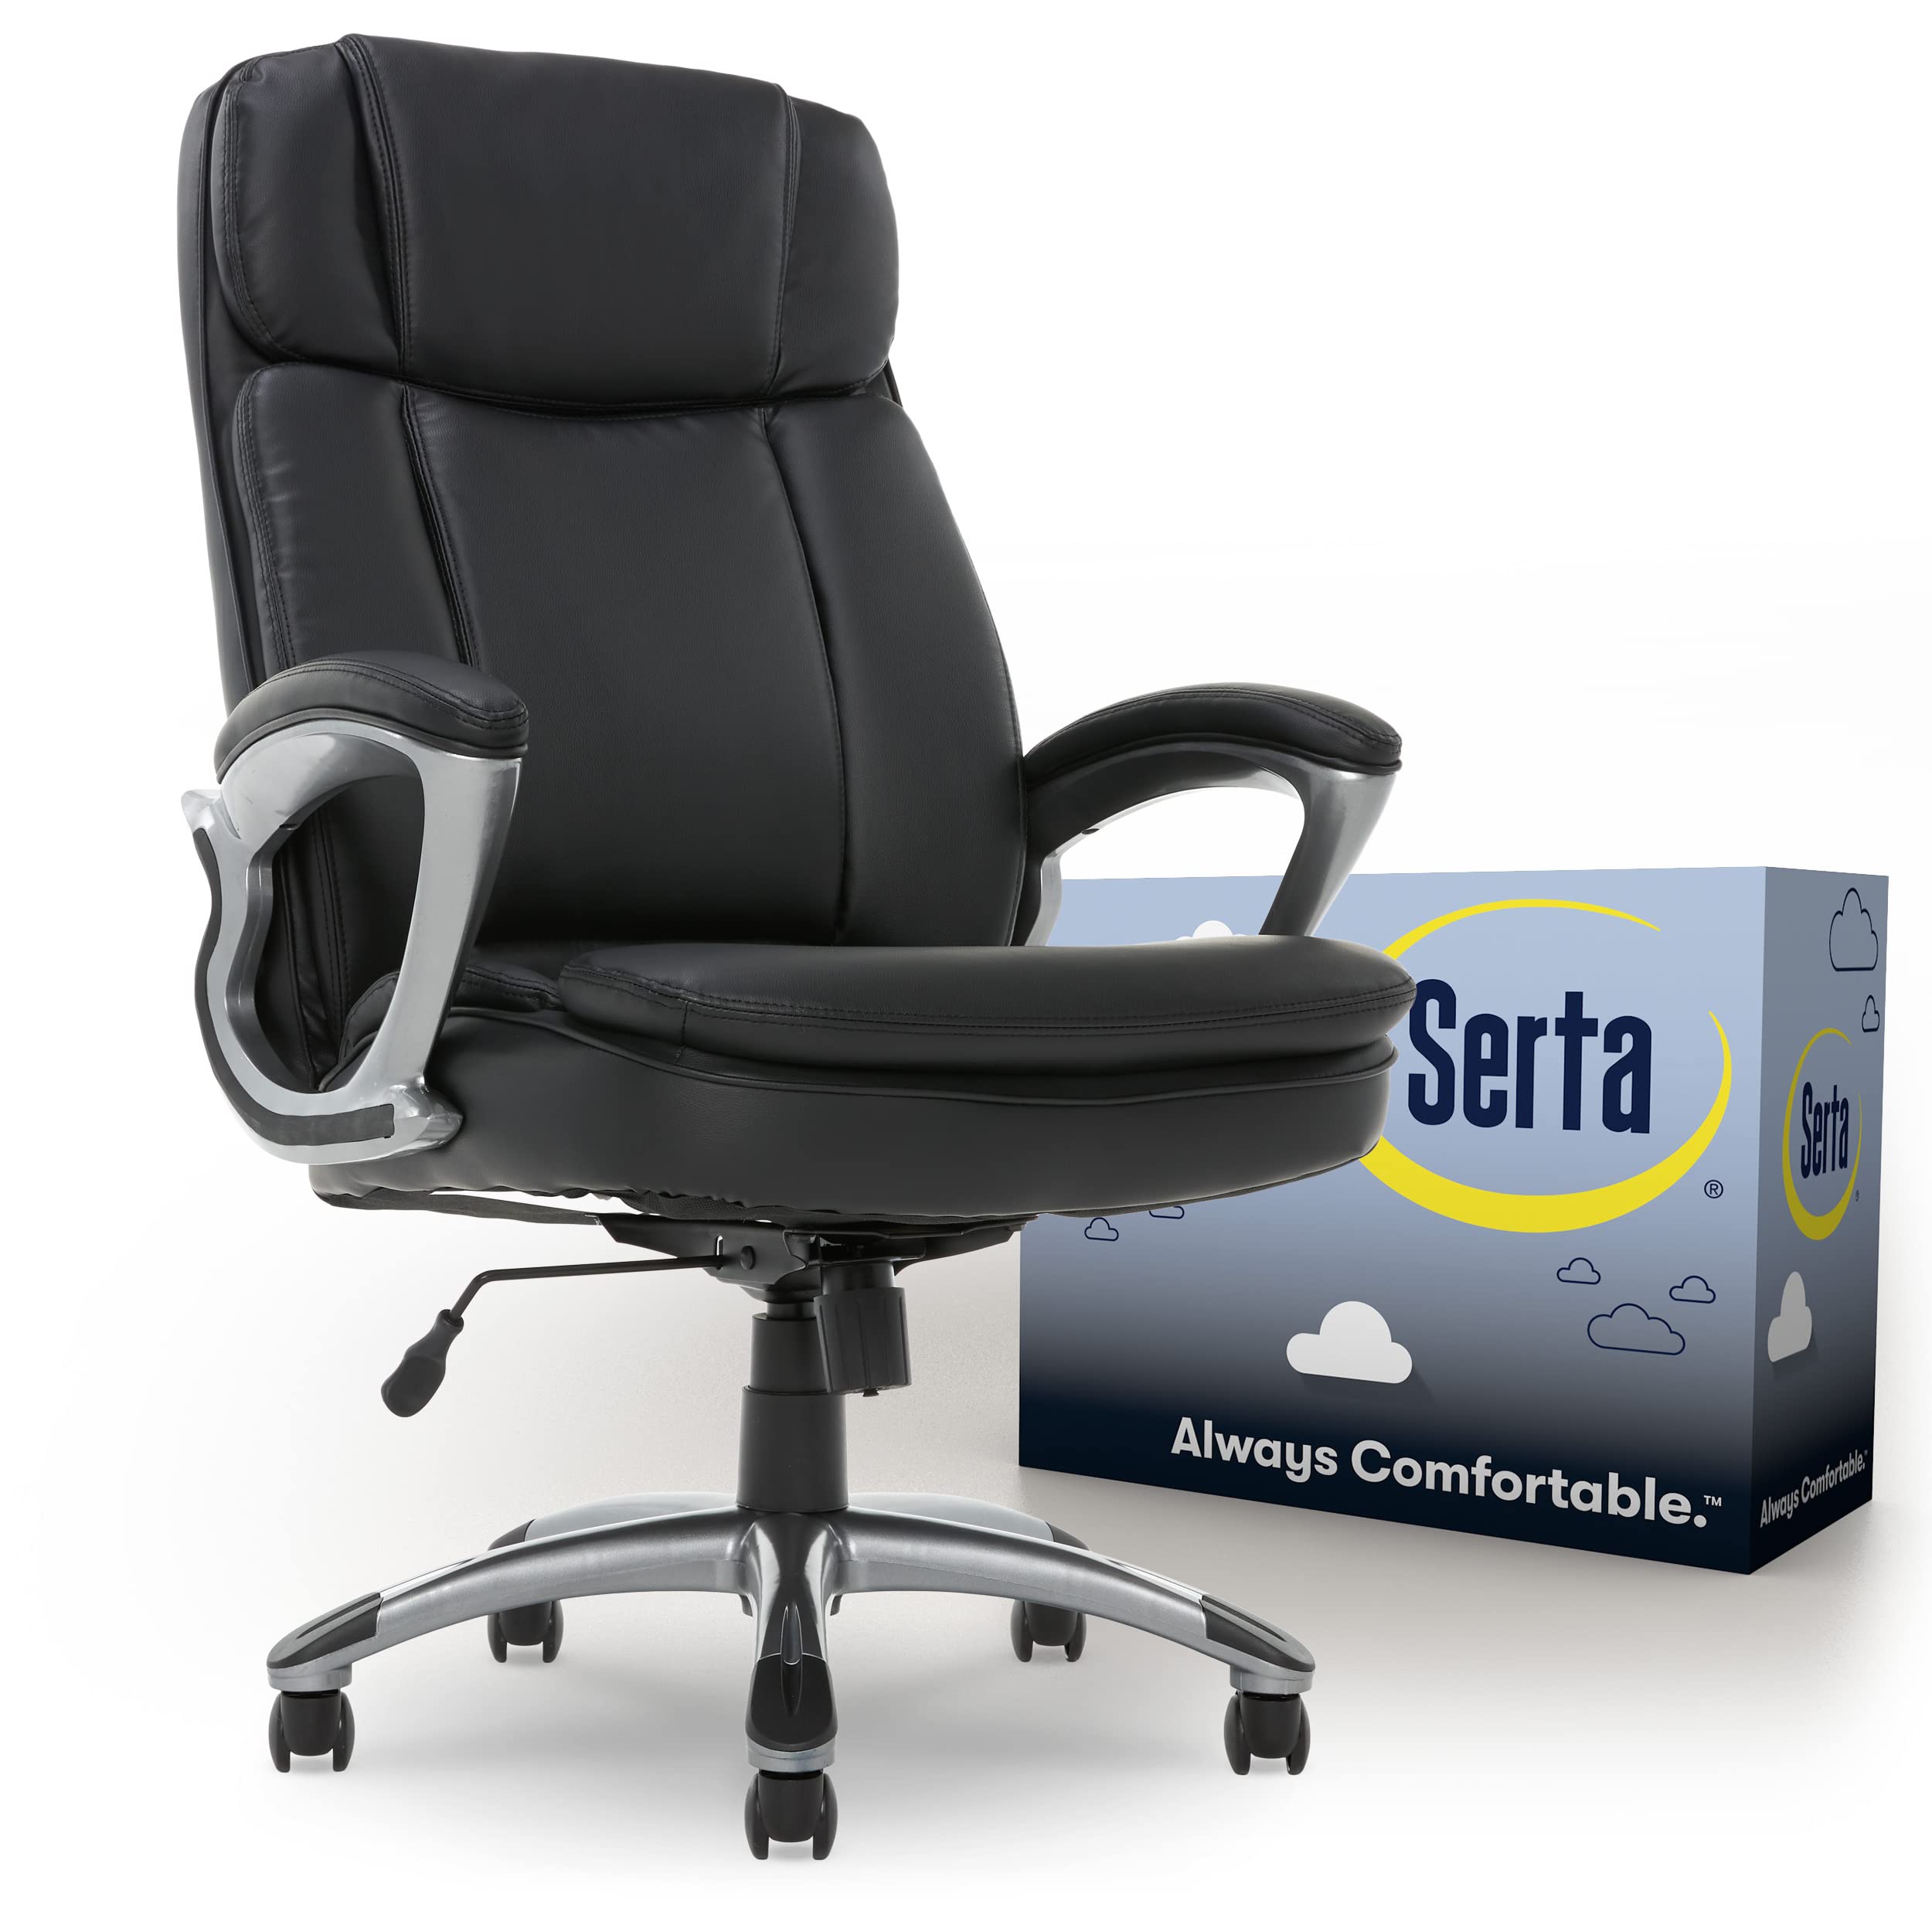 Serta 皮革大高行政办公椅高靠背全天舒适符合人体工程学的腰部支撑，粘合皮革